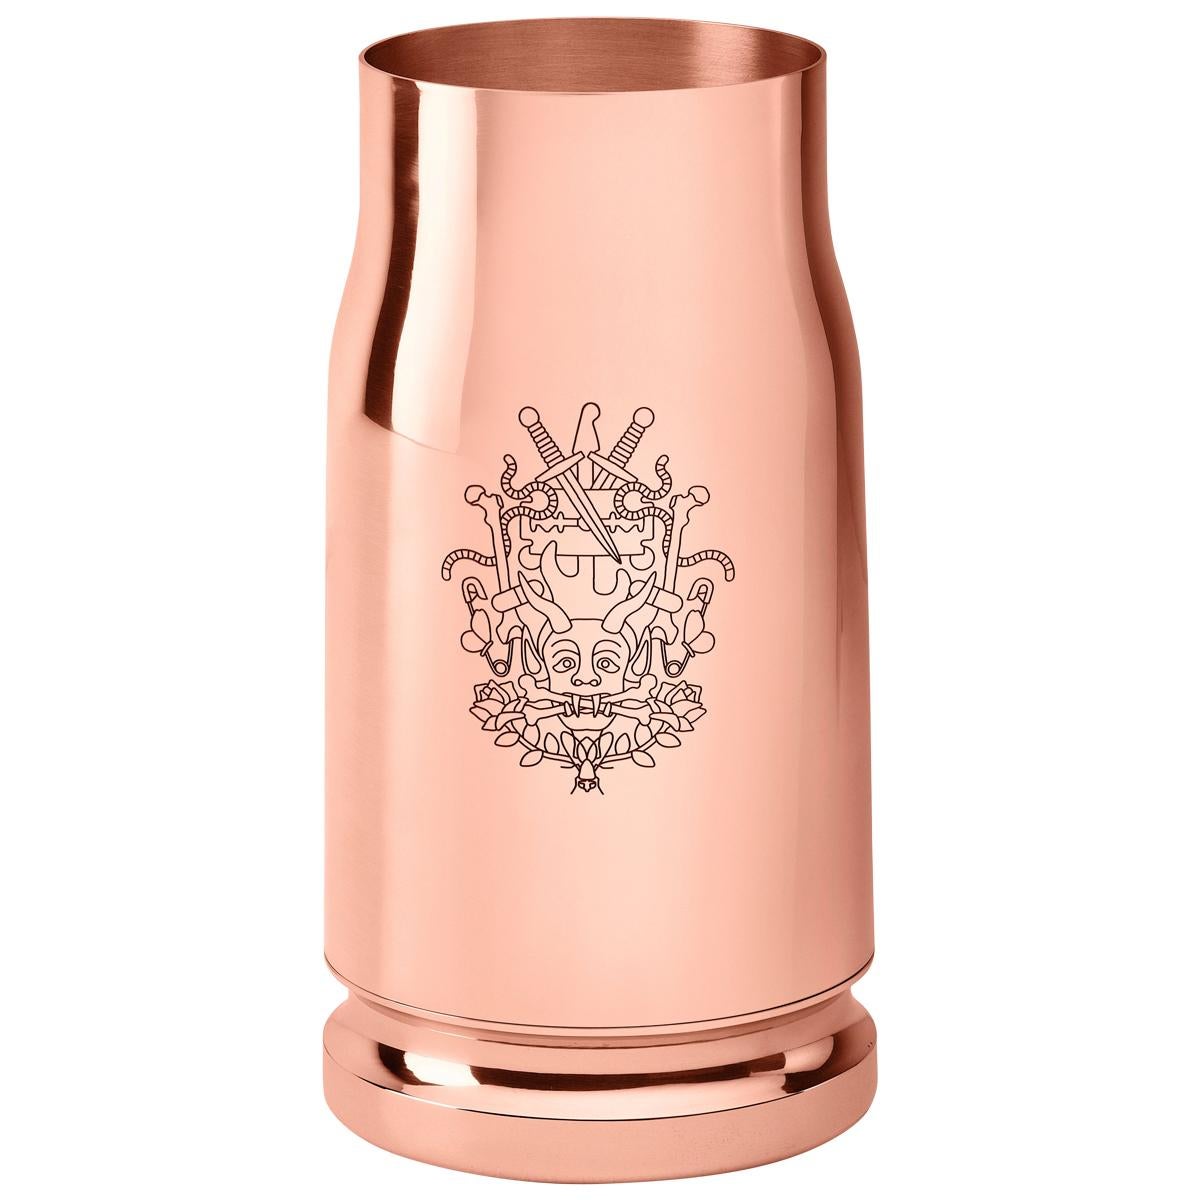 Ghidini 1961 Nowhere Bullet Vase in Copper-Plated Brass by Studio Job For Sale